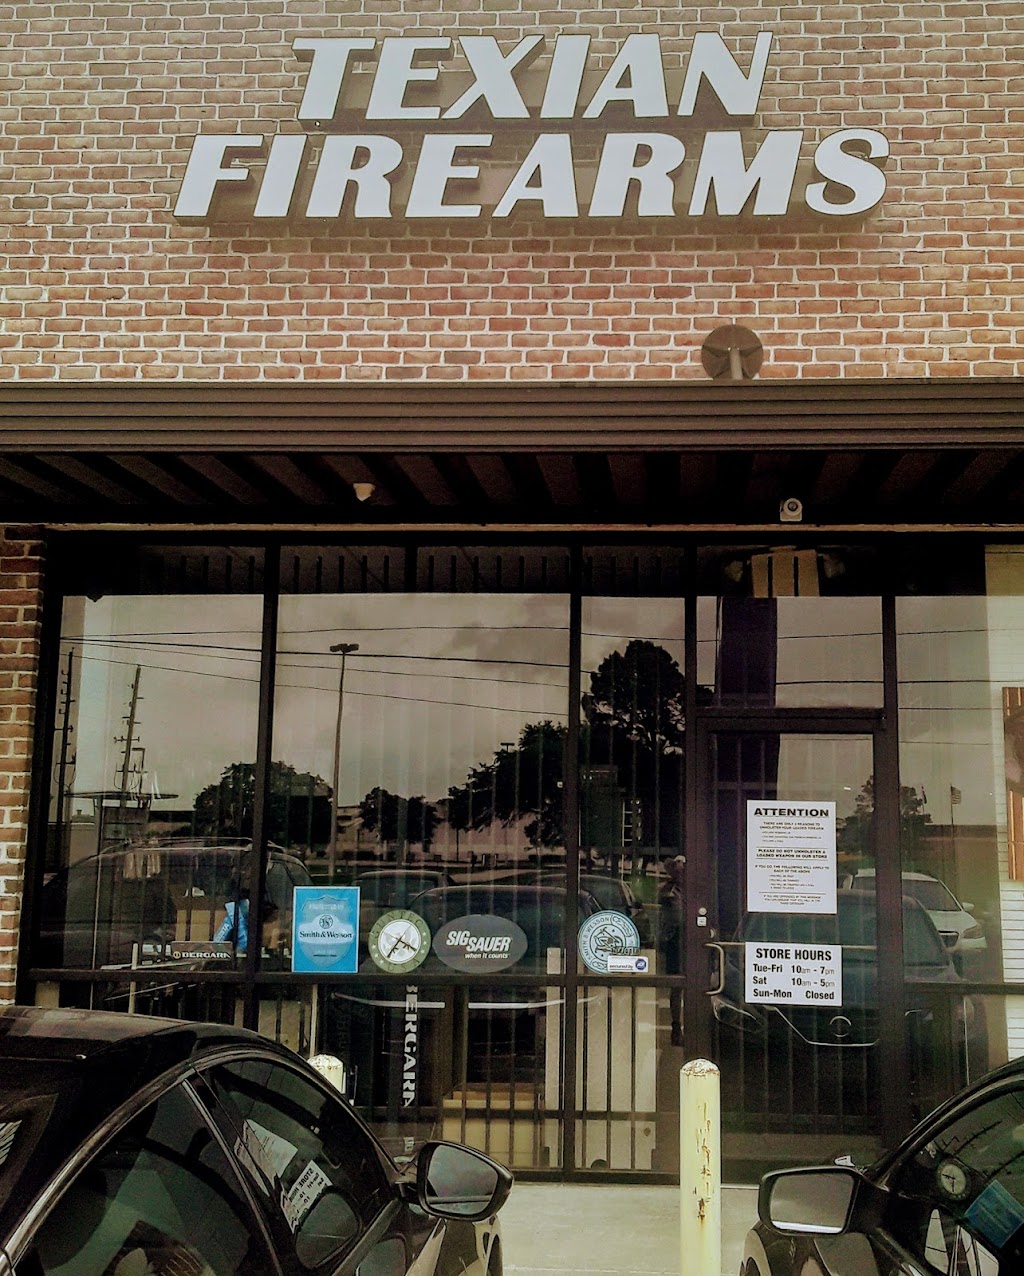 Texian Firearms | 14800 Westheimer Rd k1, Houston, TX 77082, USA | Phone: (832) 770-9358